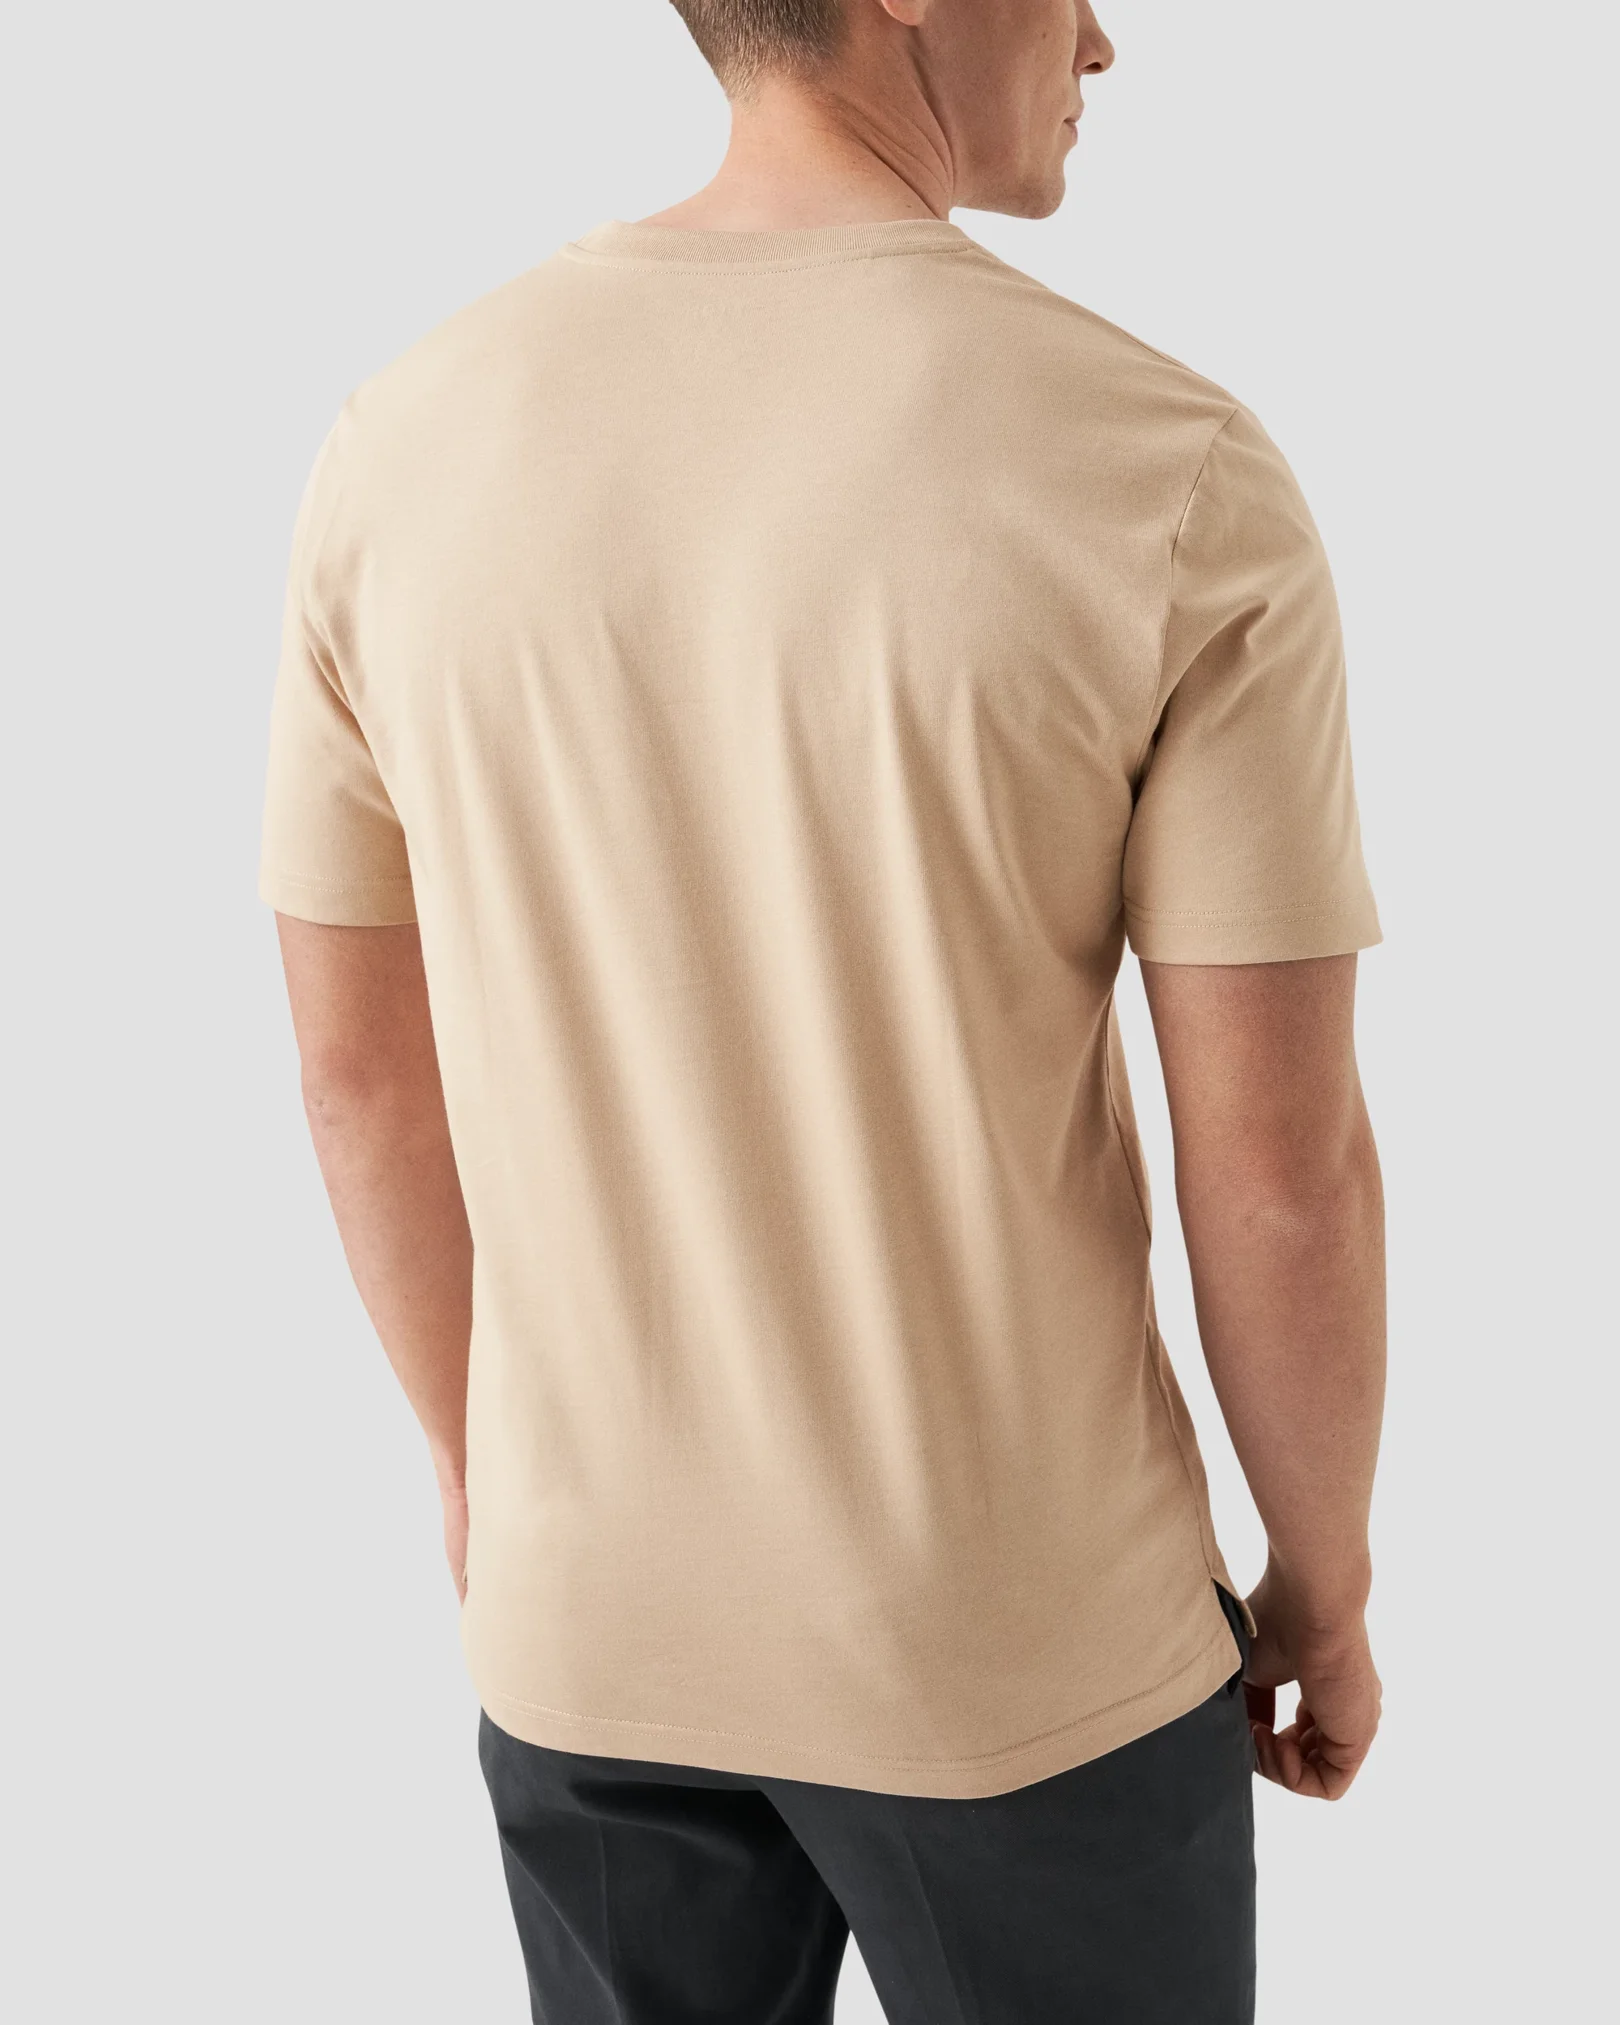 Eton - T-shirt marron clair en coton Supima